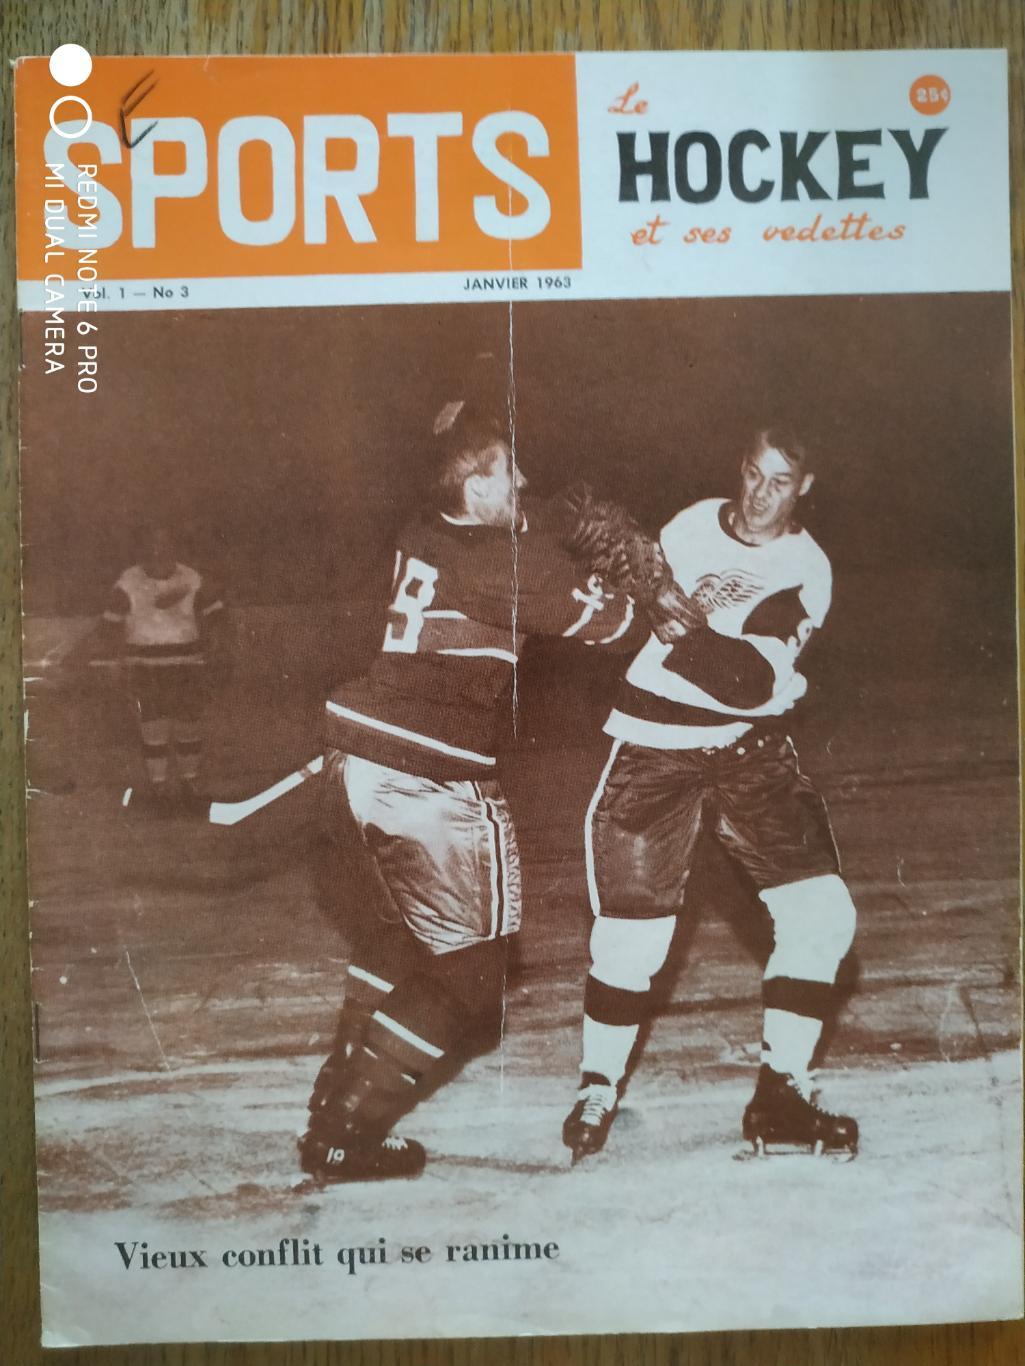 ЖУРНАЛ ЕЖЕМЕСЯЧНИК НХЛ NHL 1963 JAVIER SPORTS LE HOCKEY ET SES VEDETTES